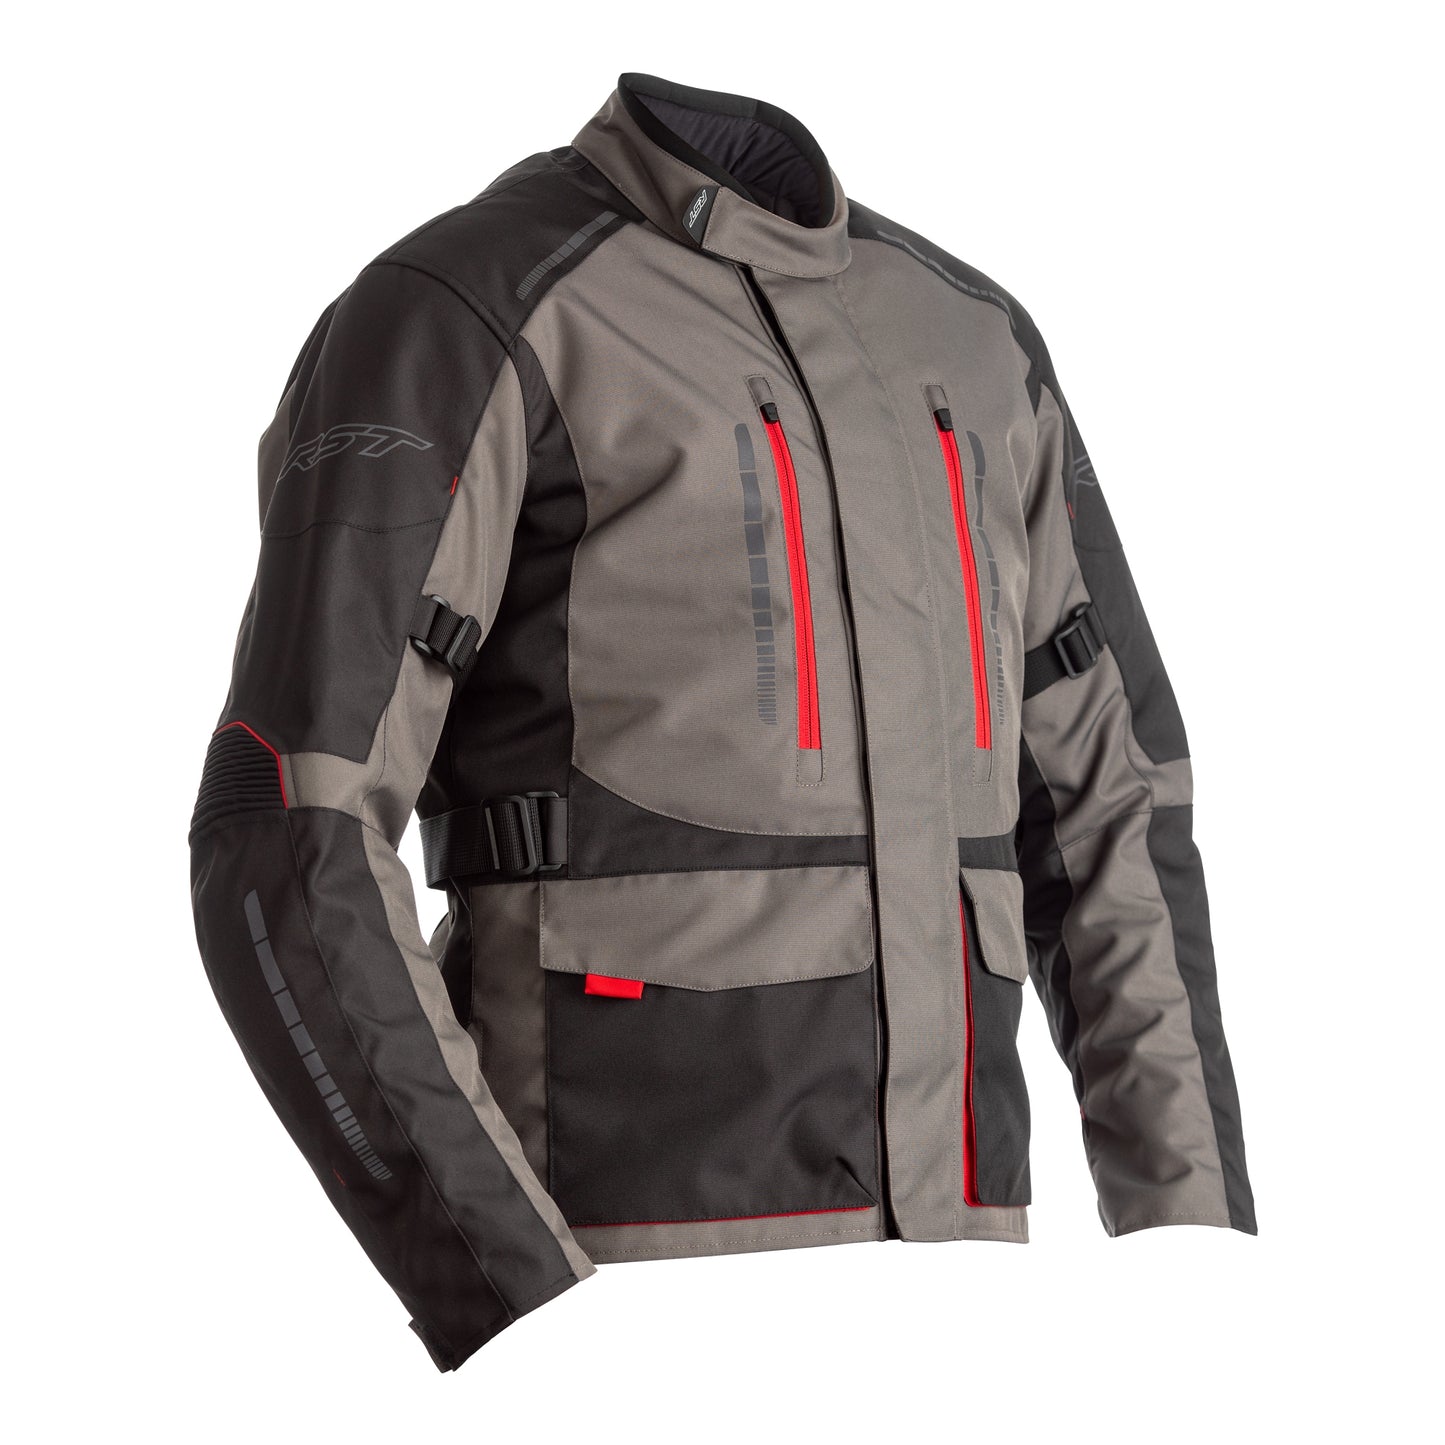 RST Atlas CE Men's Waterproof Textile Jacket - Grey / Black / Red (2366)